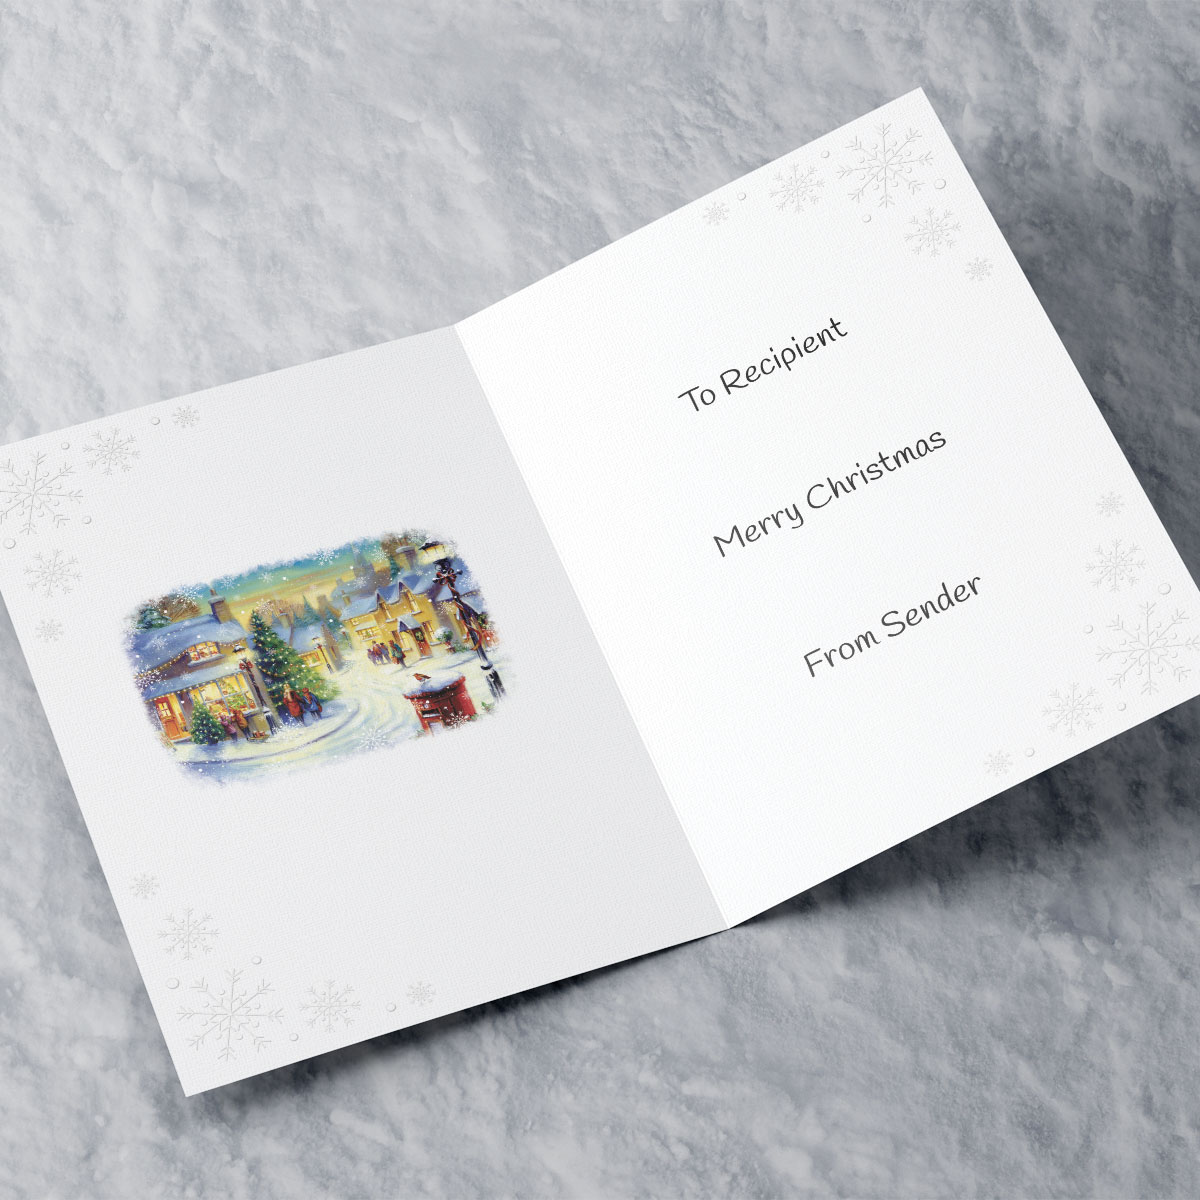 Personalised Christmas Card - Snowy Street